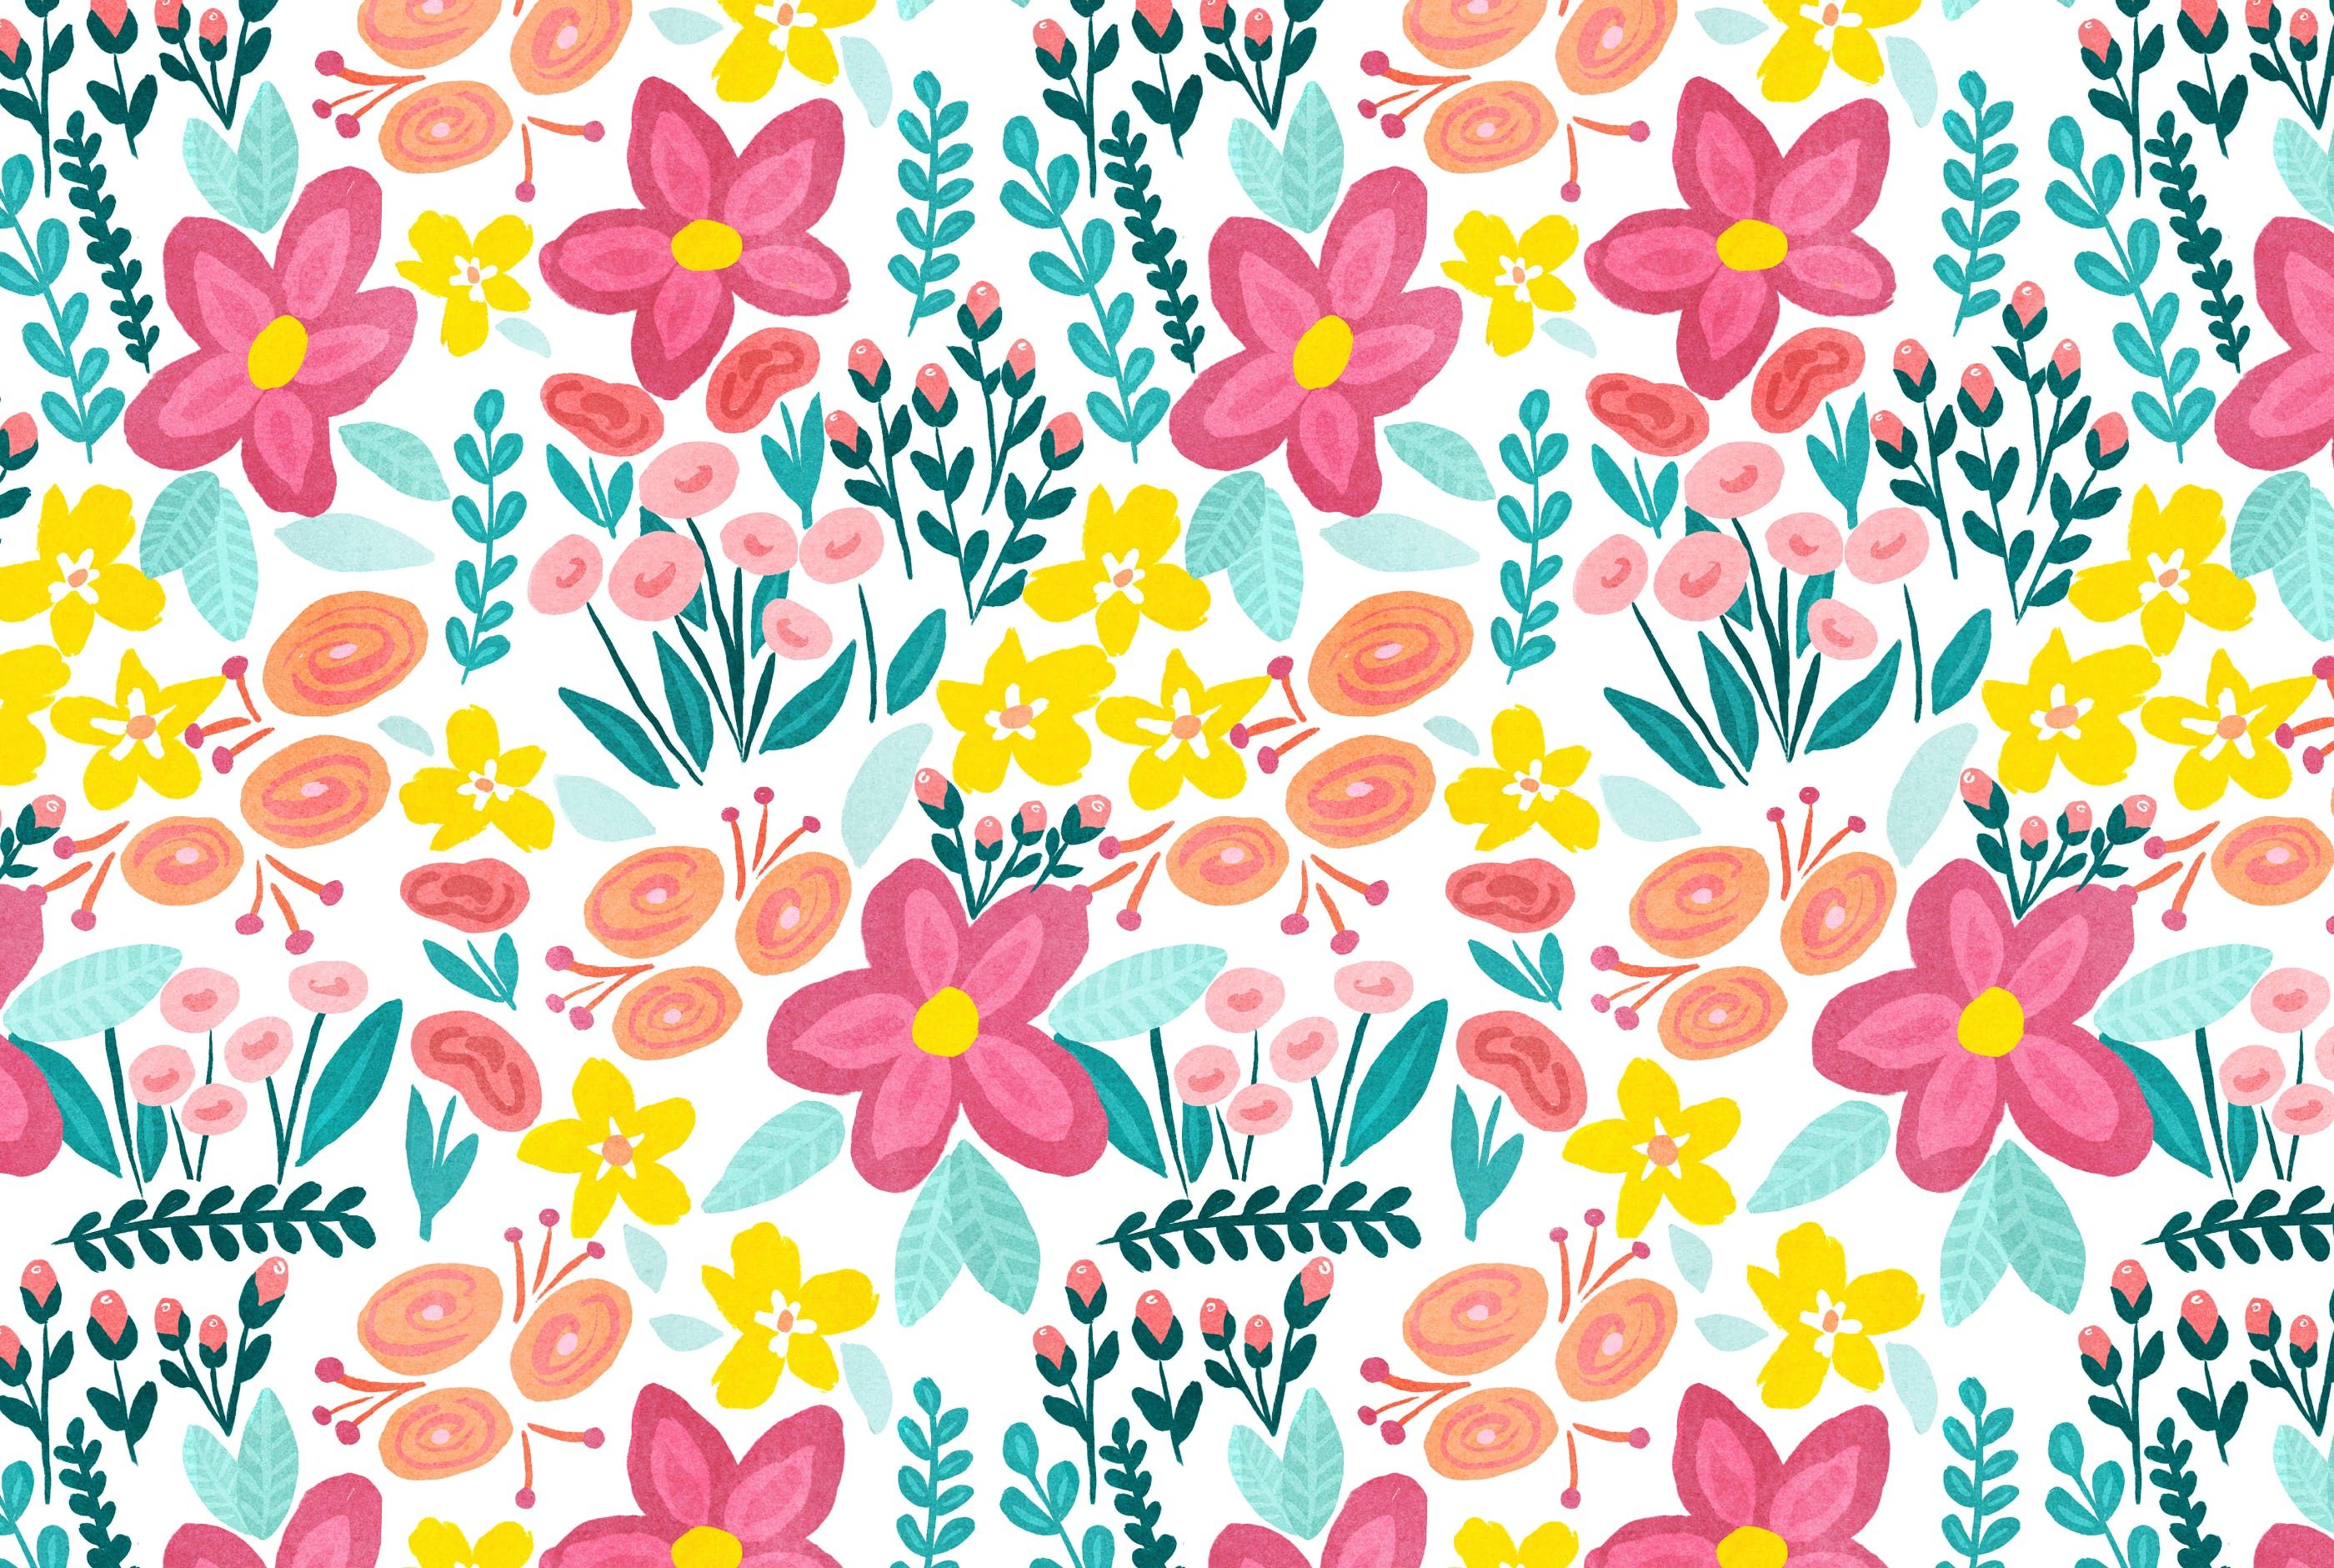 4 Free Summer Desktop Wallpapers   May Designs Floral wallpaper